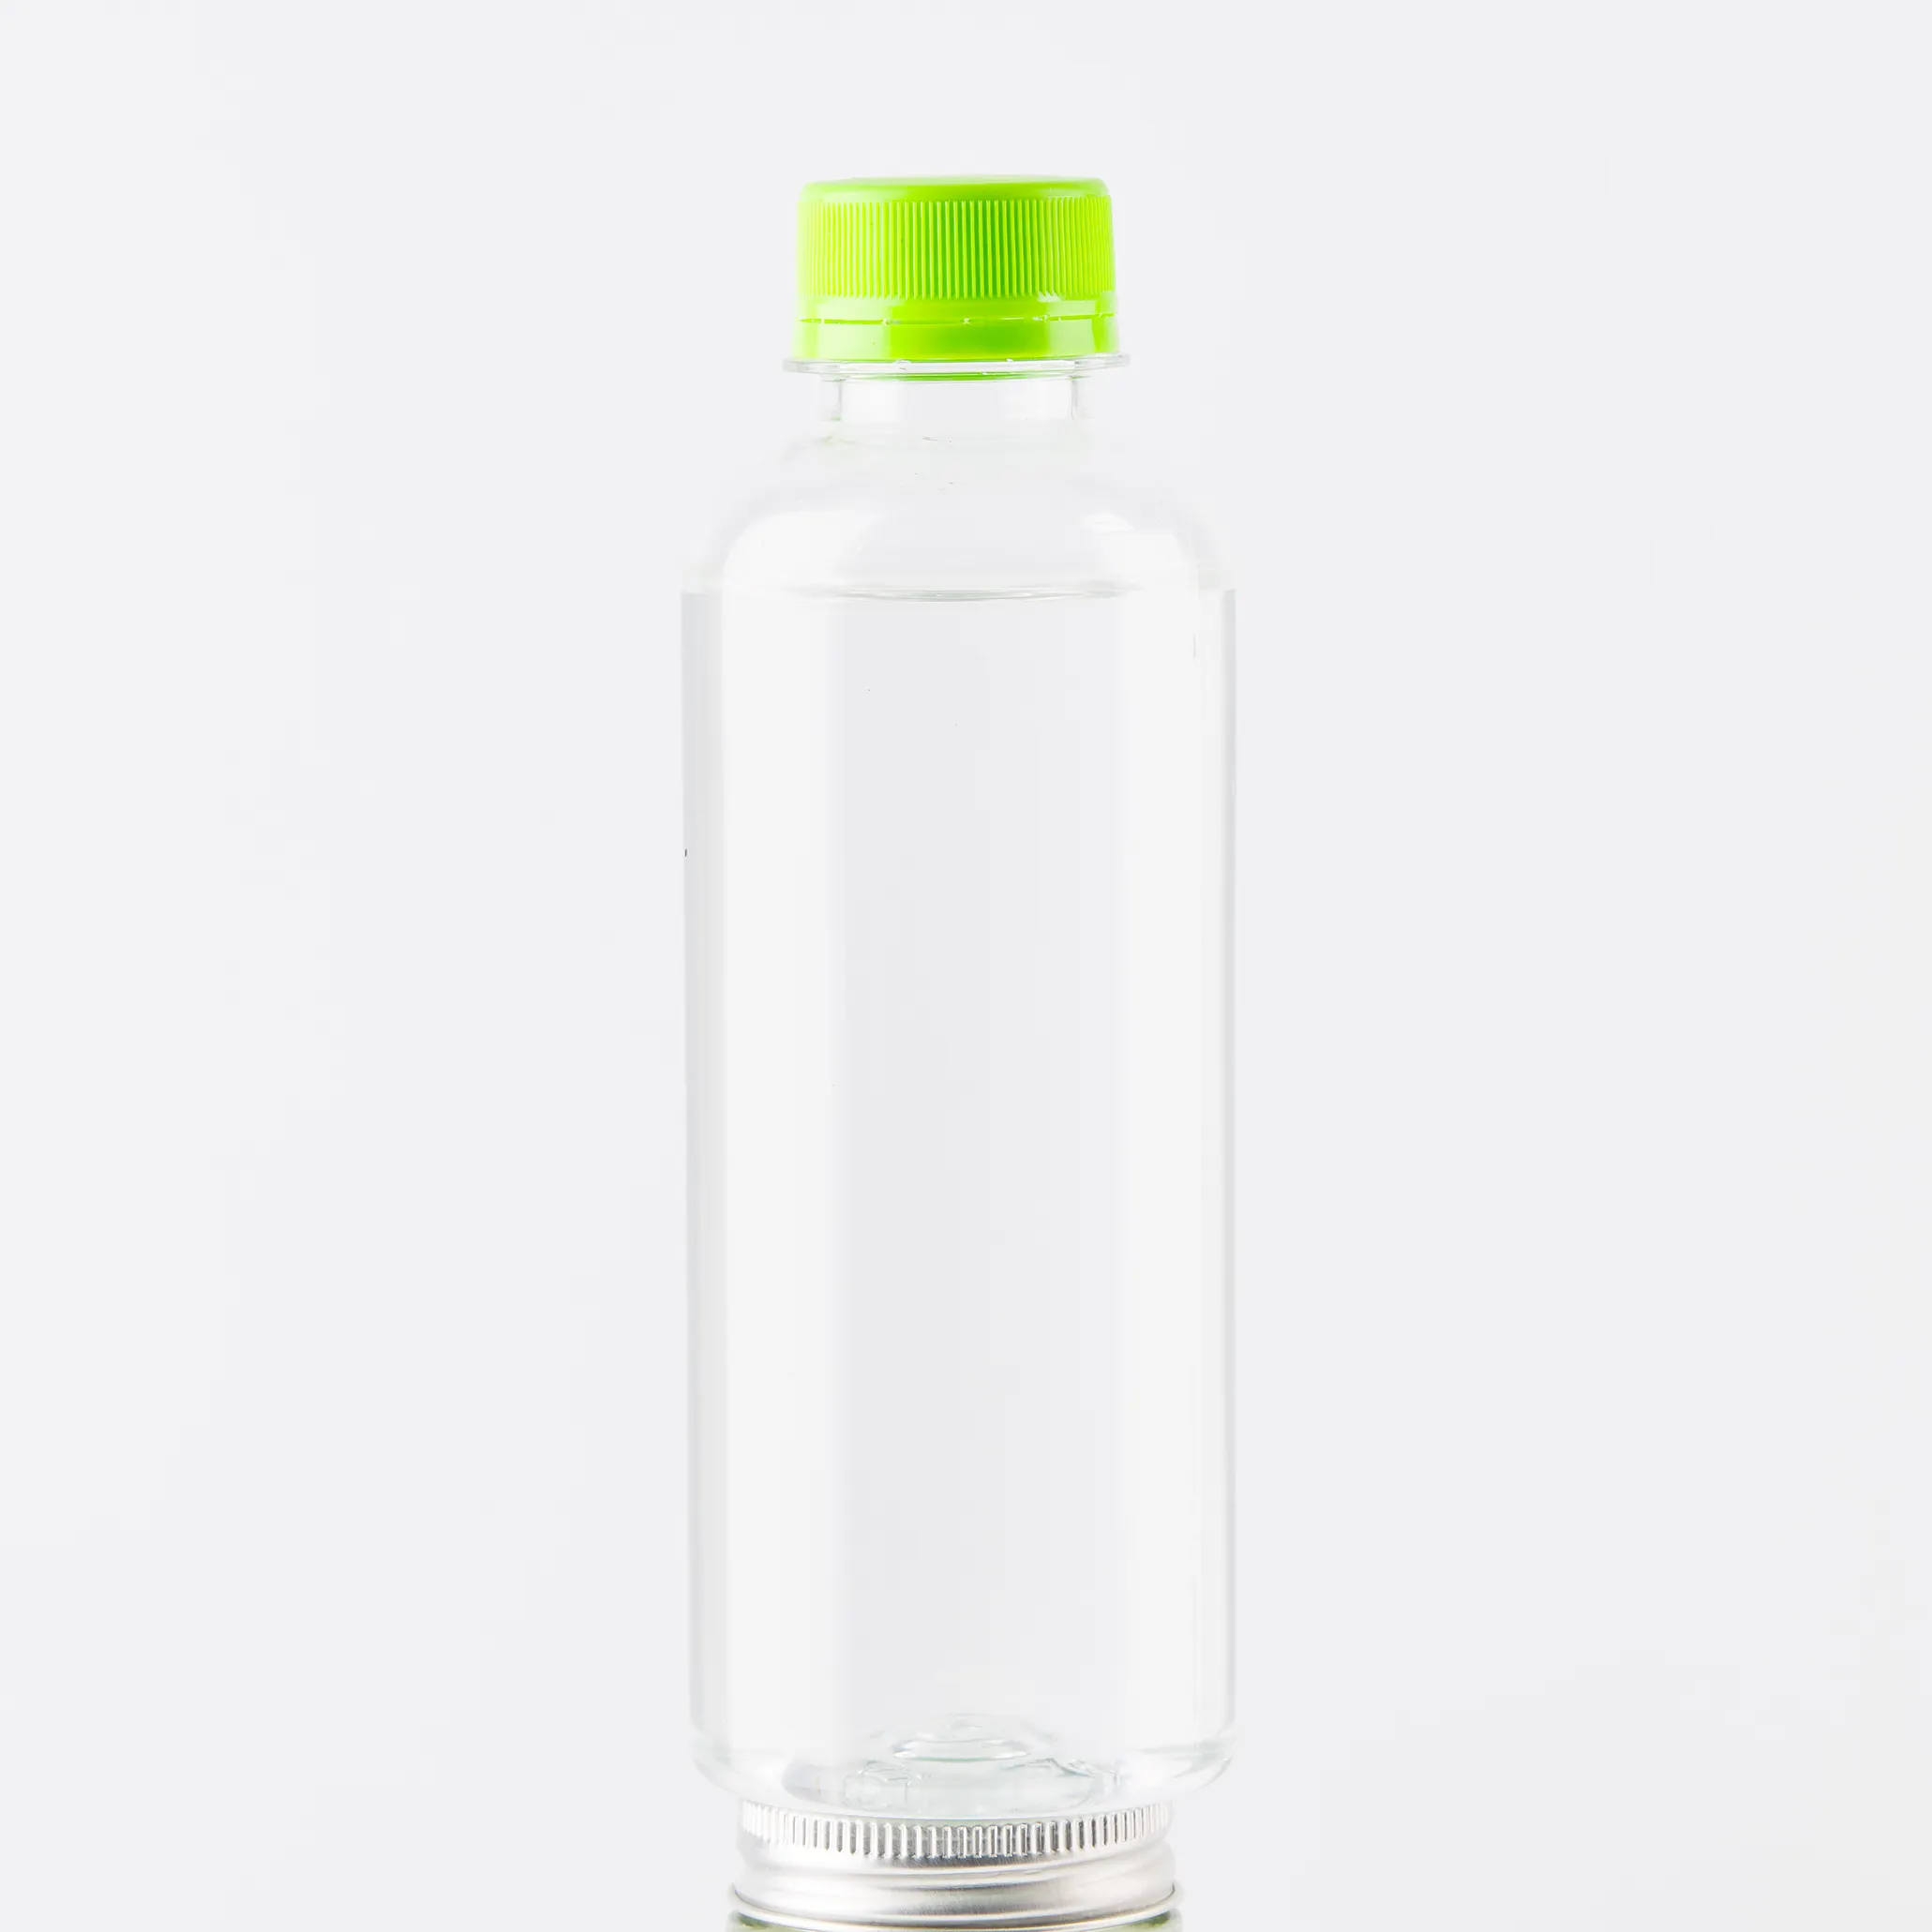 The Best Premium Quality von Frozen 100% Raw Juice Organic Young Coconut Water (Nam-Hom) in flasche